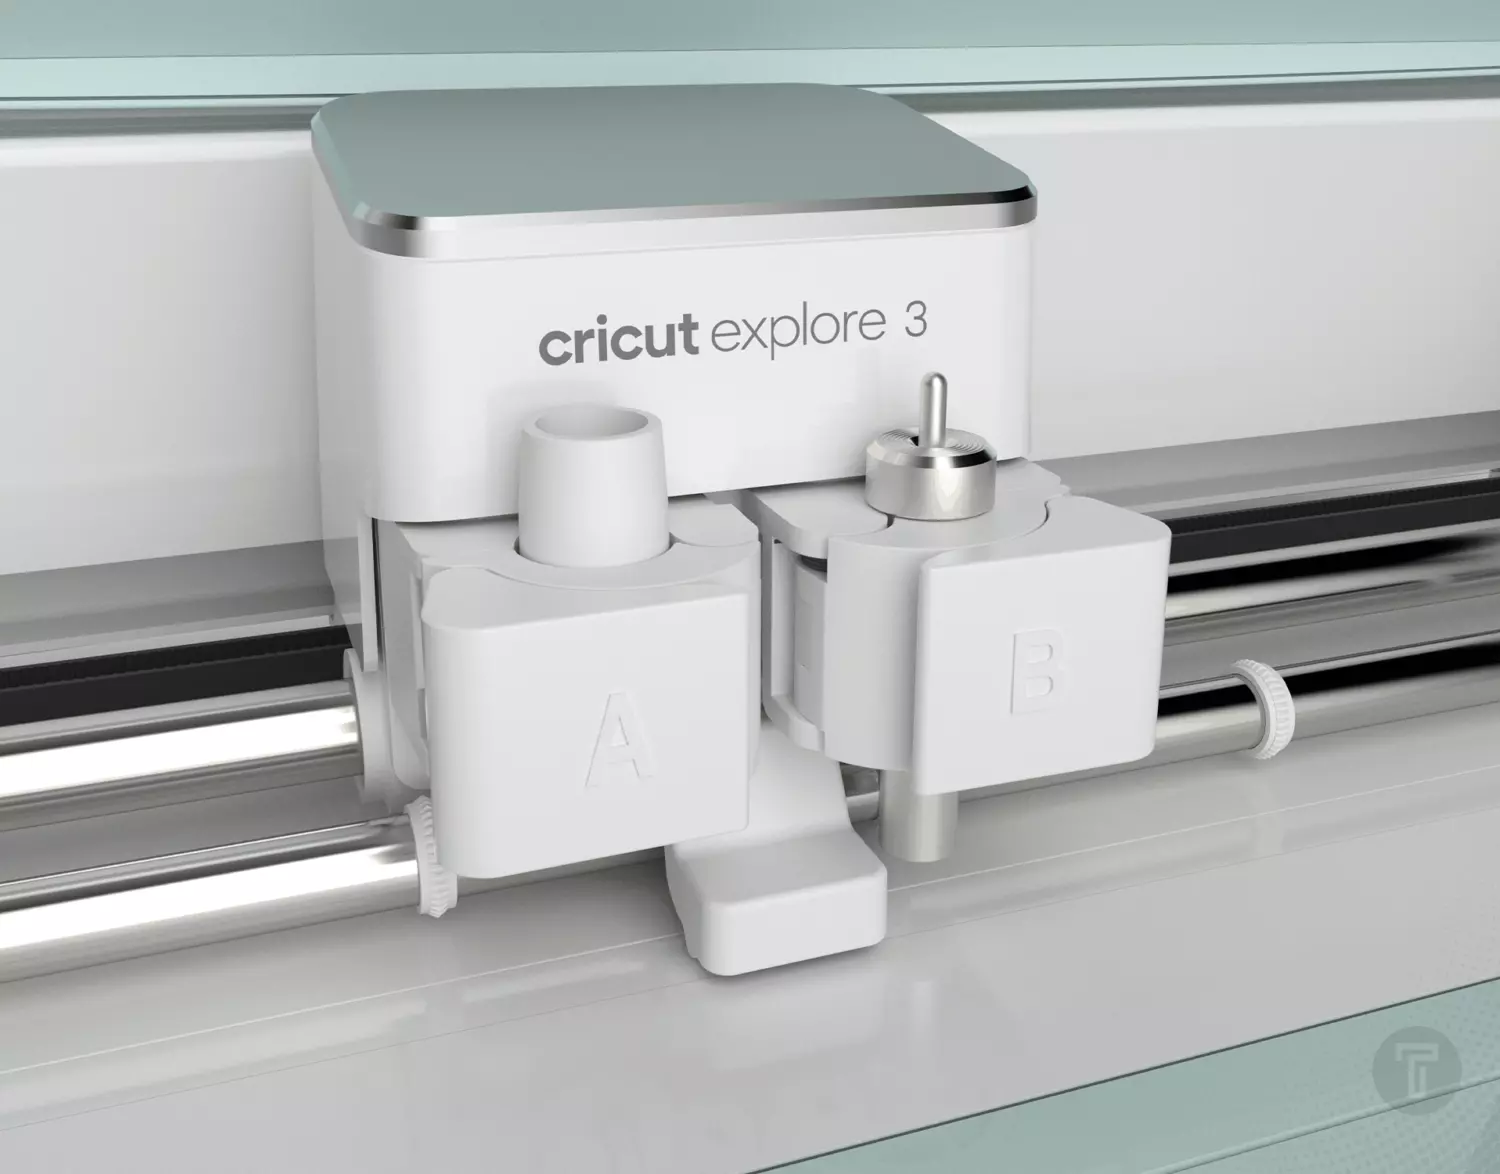 REVIEW: Cricut Explore 3 Smart Cutting Machine, With Photos